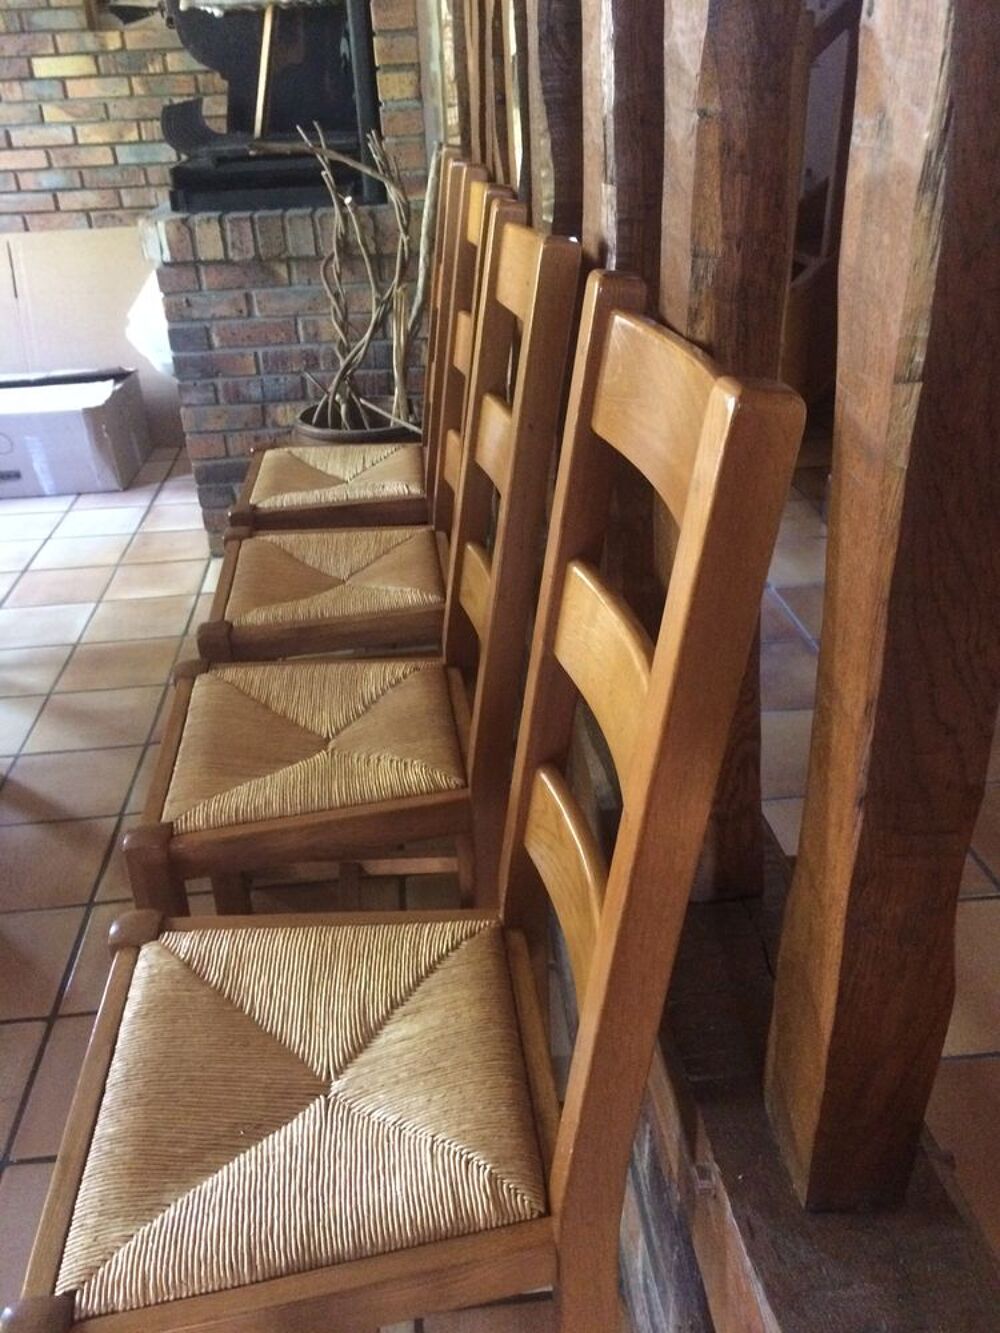 6 chaises en ch&ecirc;ne massif style campagnard assise de seigle
Meubles